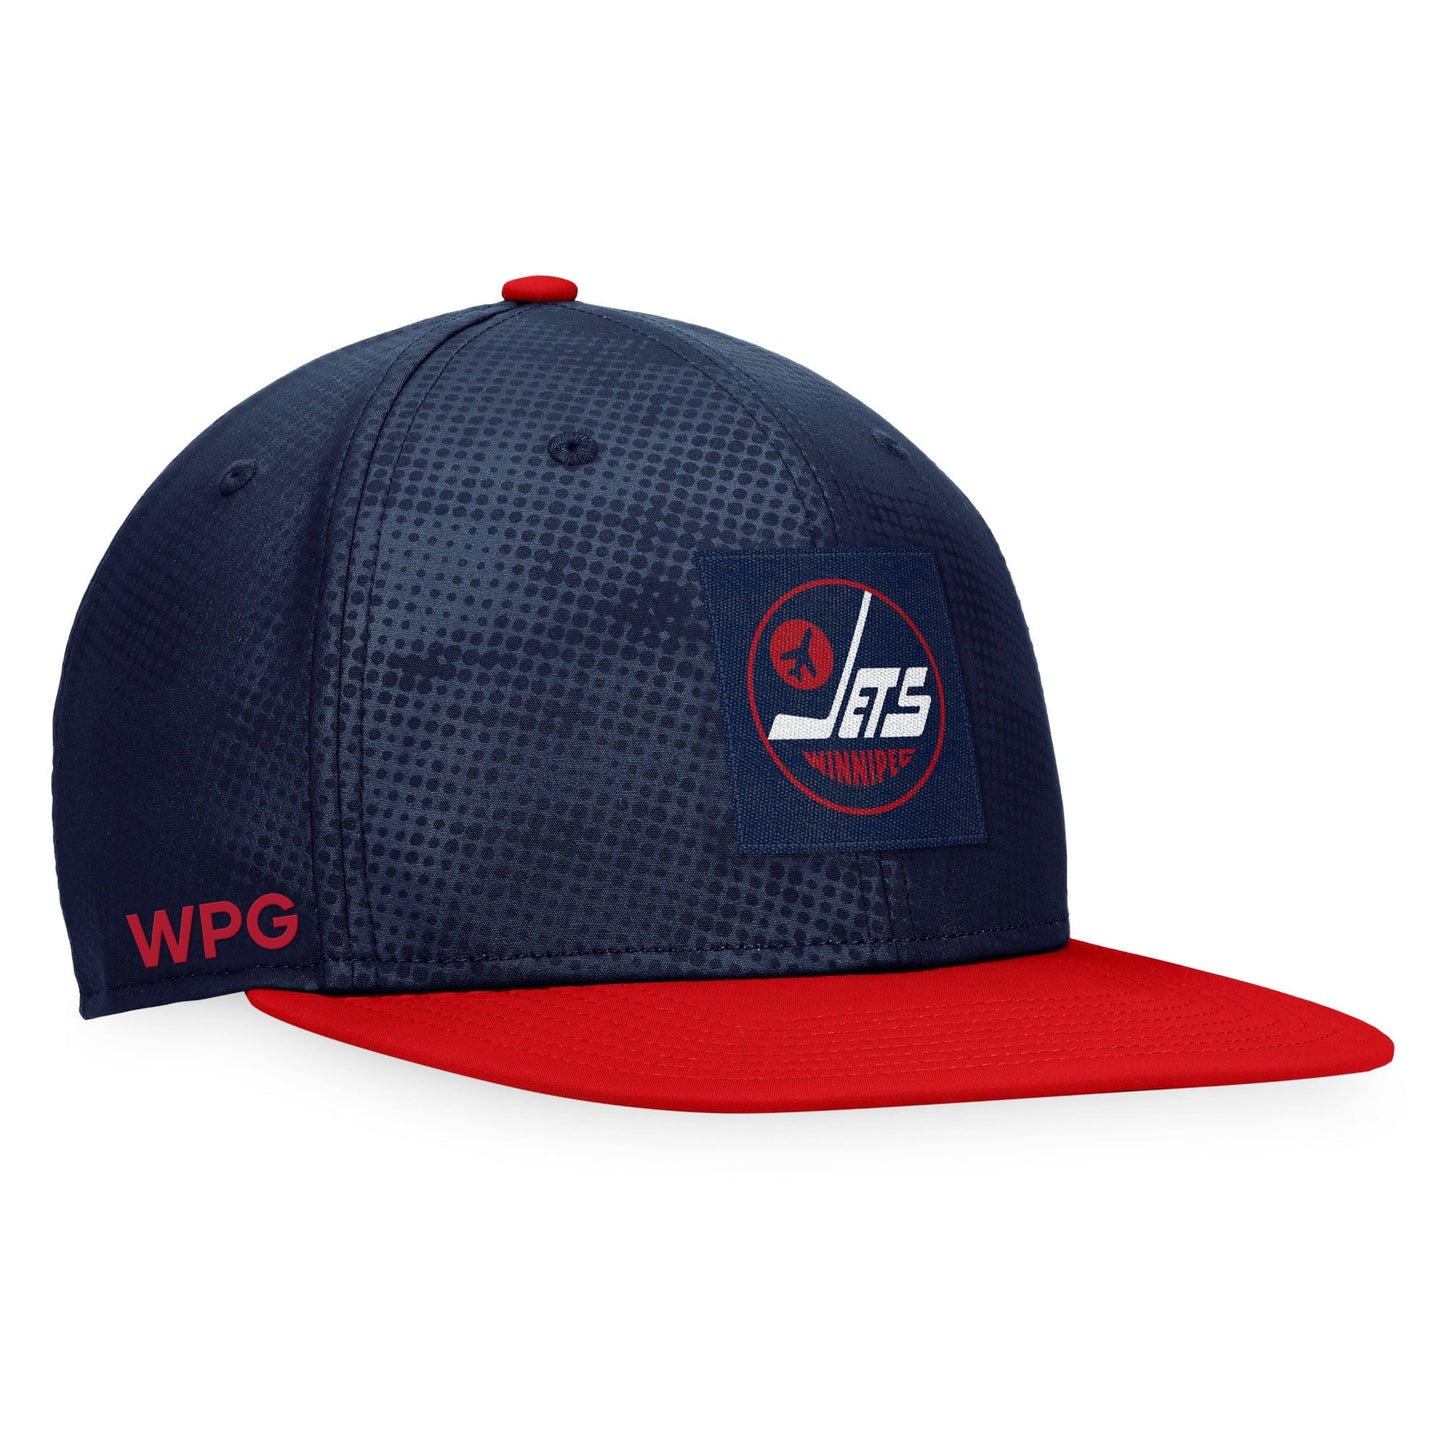 Men's Fanatics Branded Navy/Red Winnipeg Jets Authentic Pro Alternate Logo Snapback Hat - OSFA